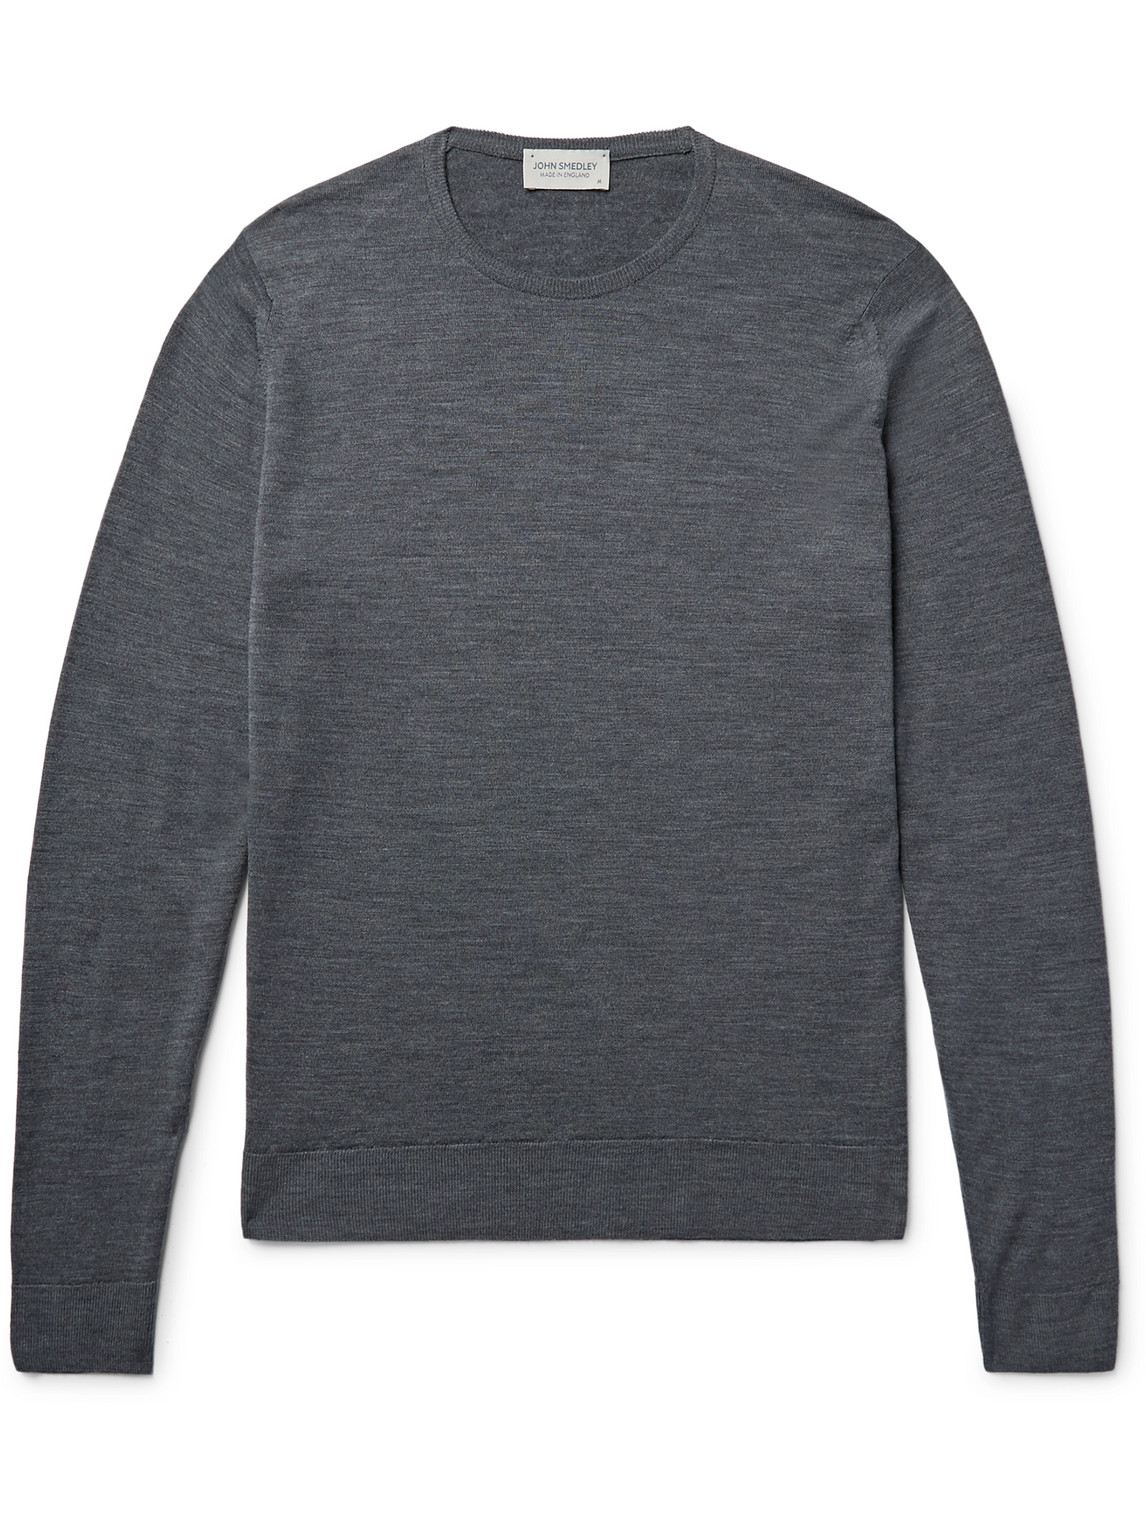 John Smedley Cherwell Merino Wool Turtleneck Sweater In Gray